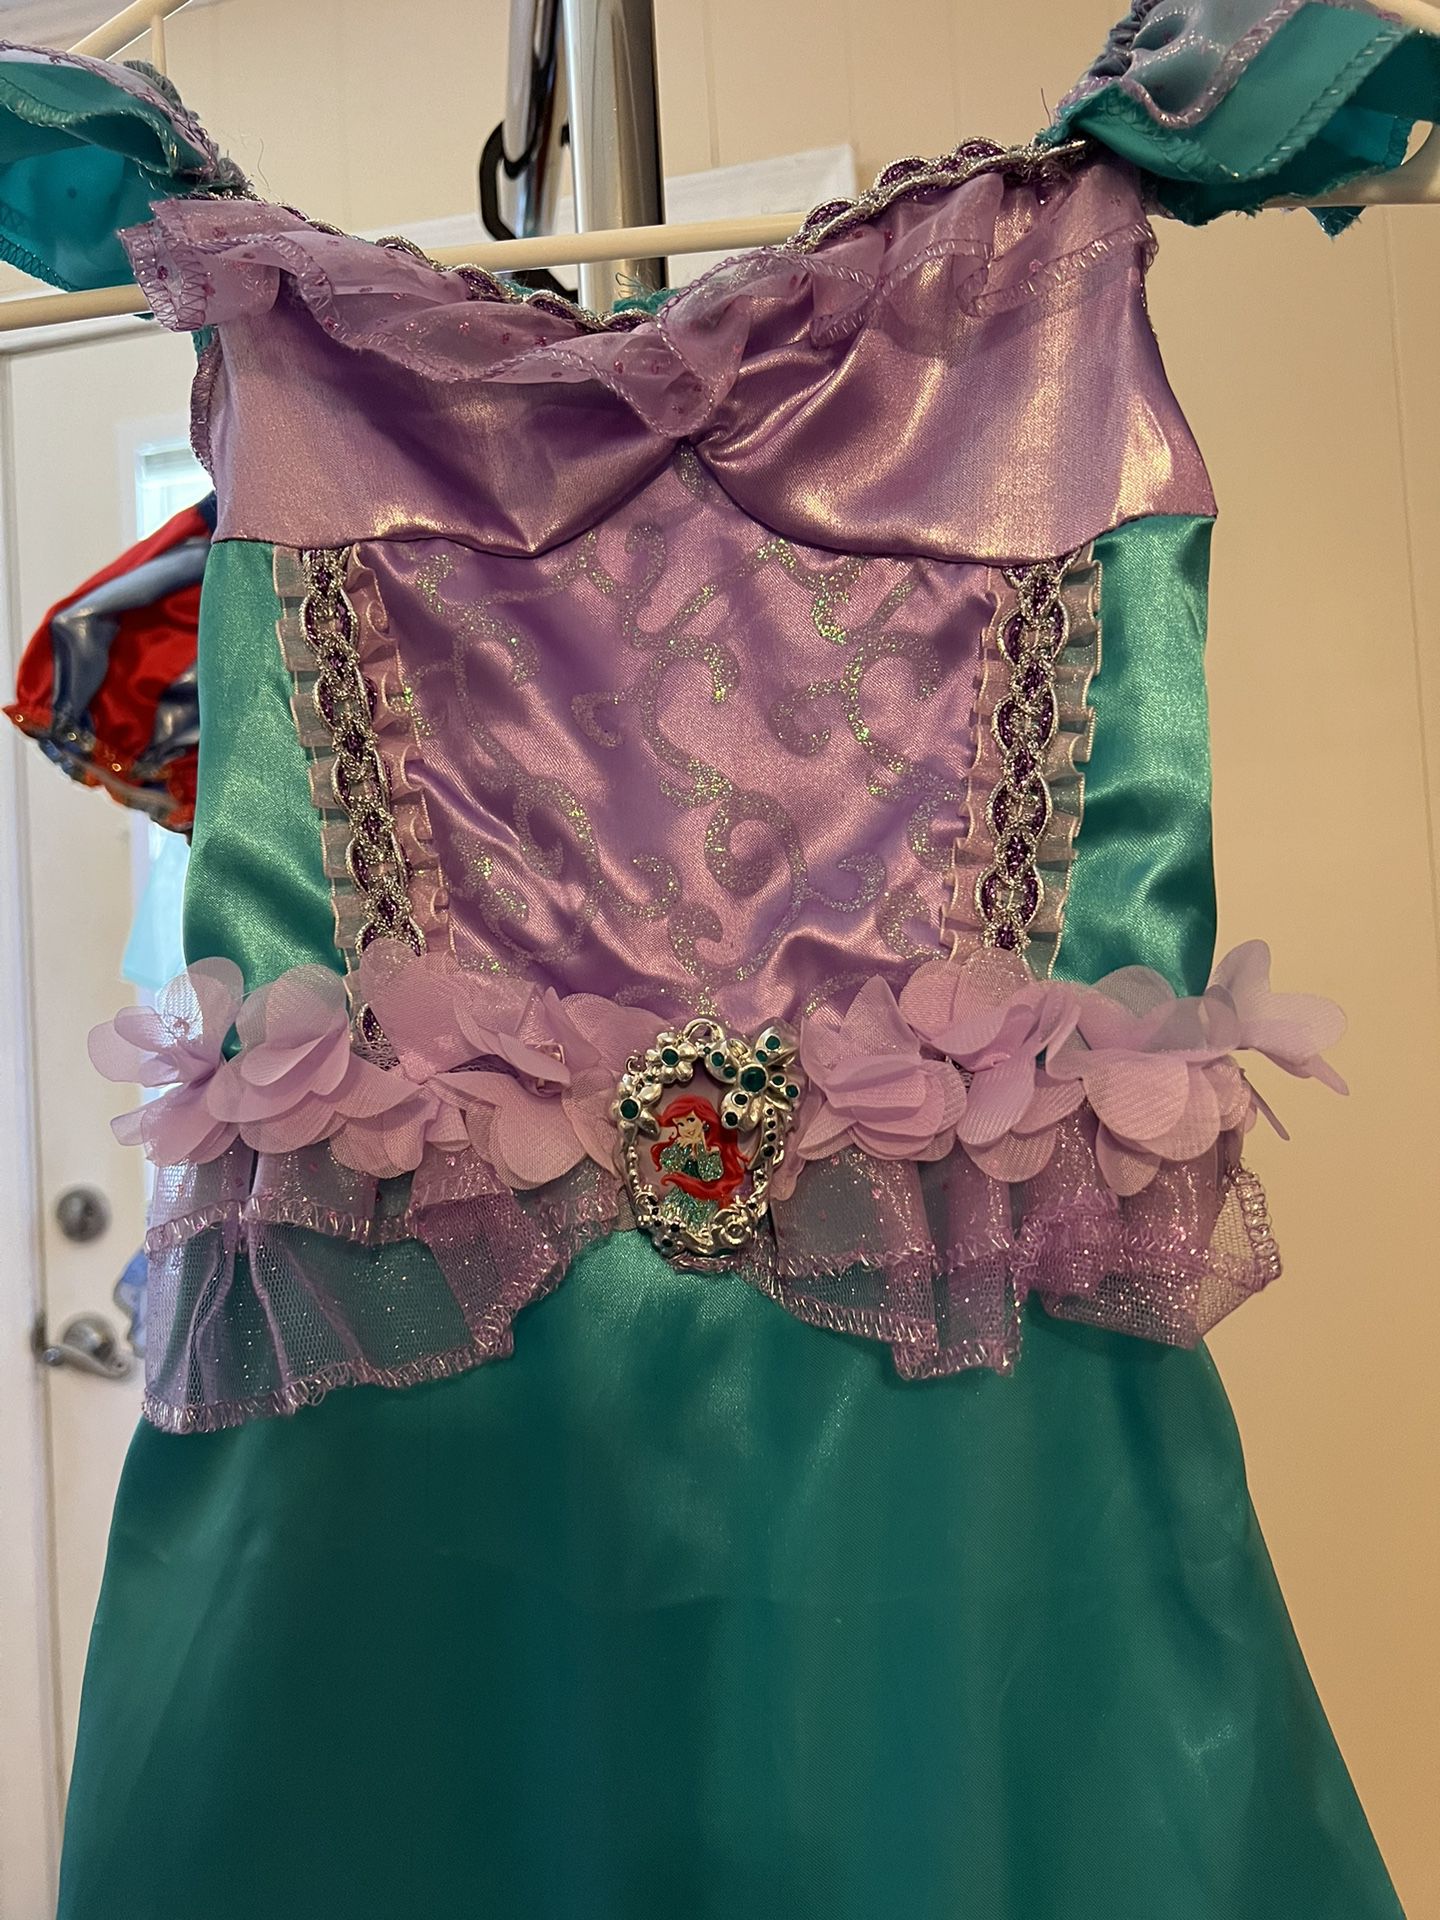  “ Princess” Disney Child Halloween costume